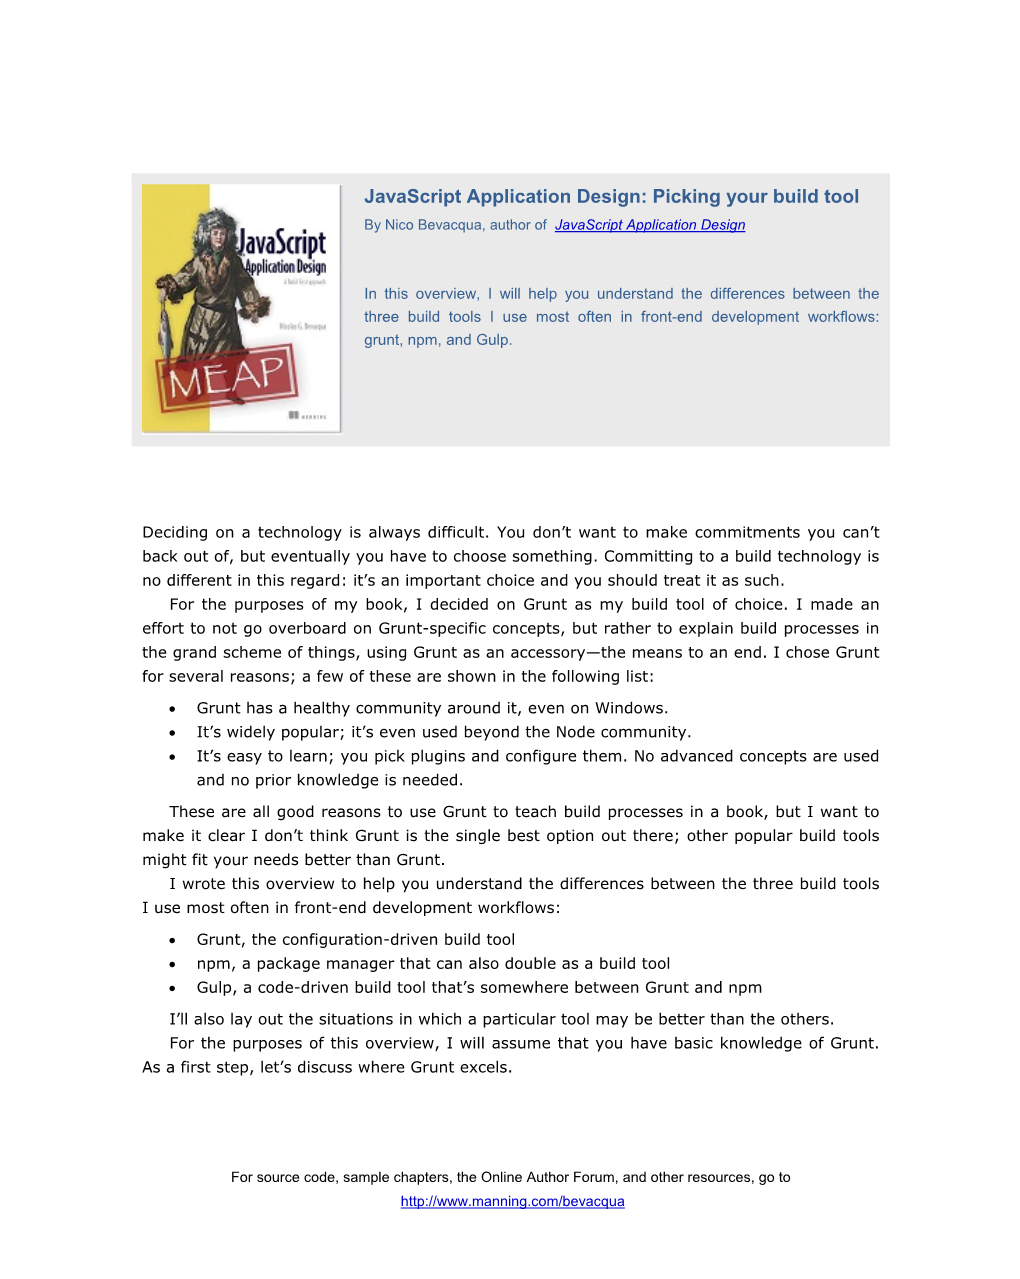 Javascript Application Design: Picking Your Build Tool by Nico Bevacqua, Author of Javascript Application Design